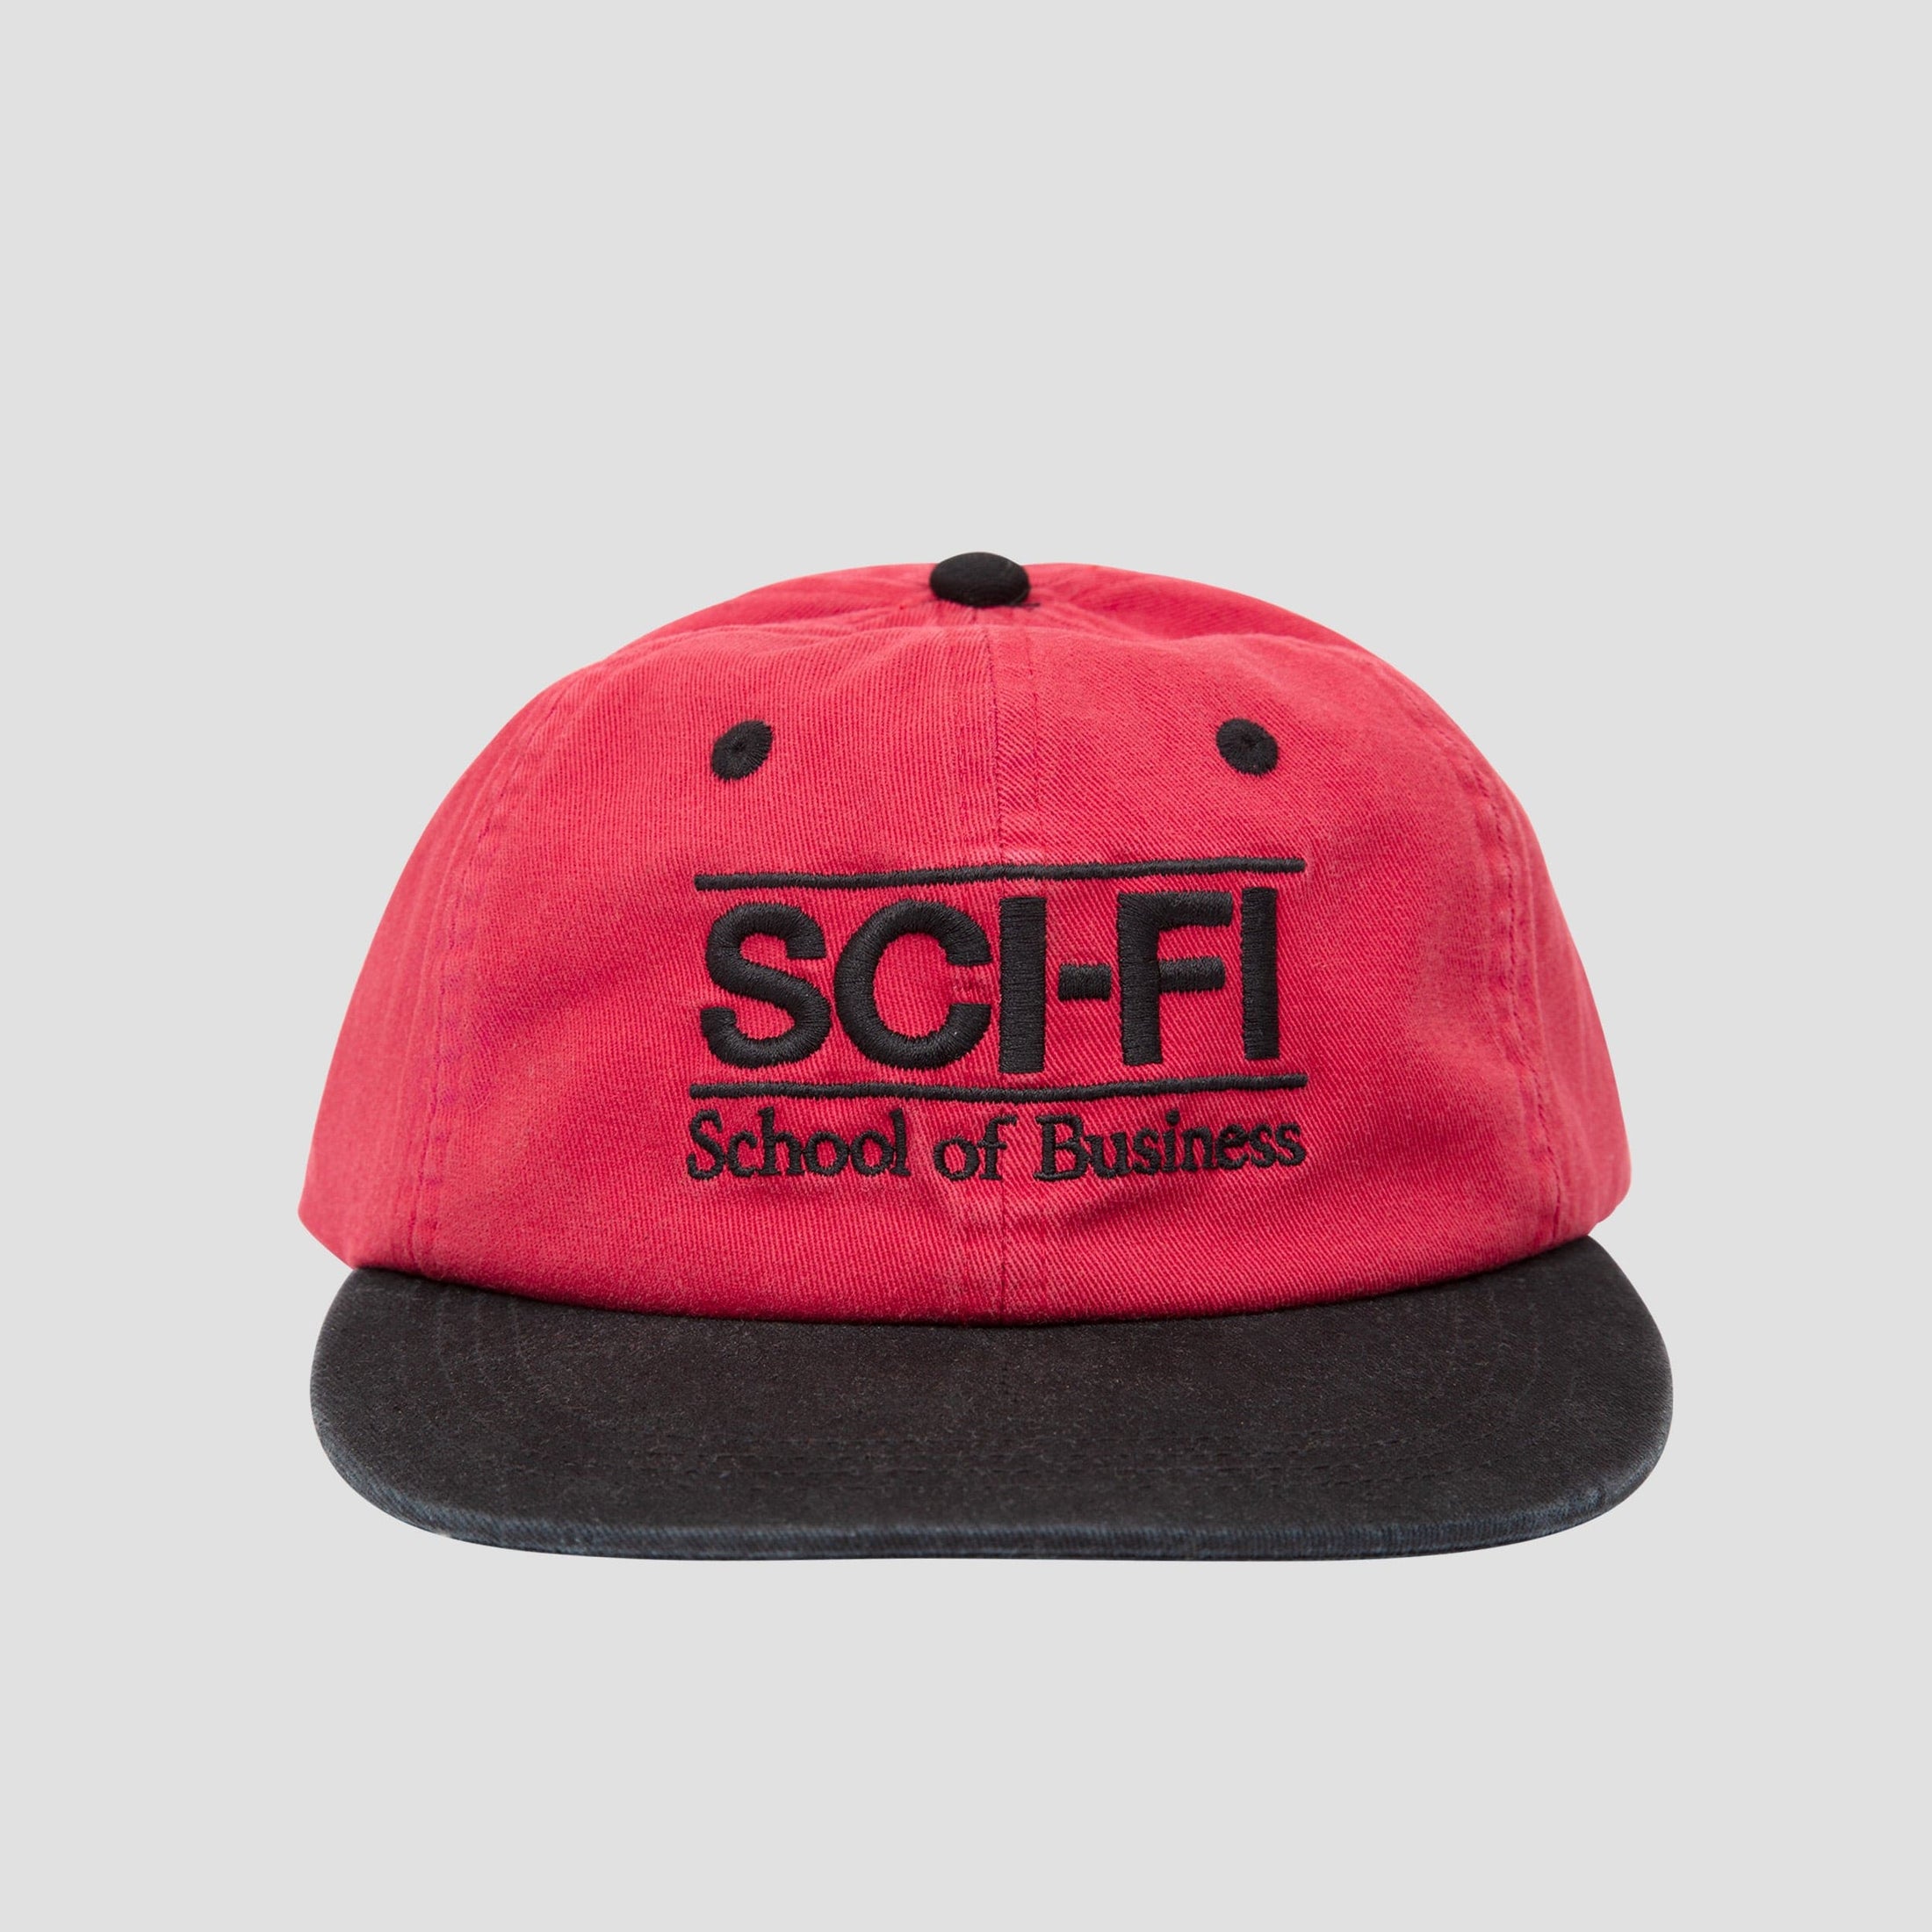 Sci-Fi Fantasy School of Business Cap Red / Black